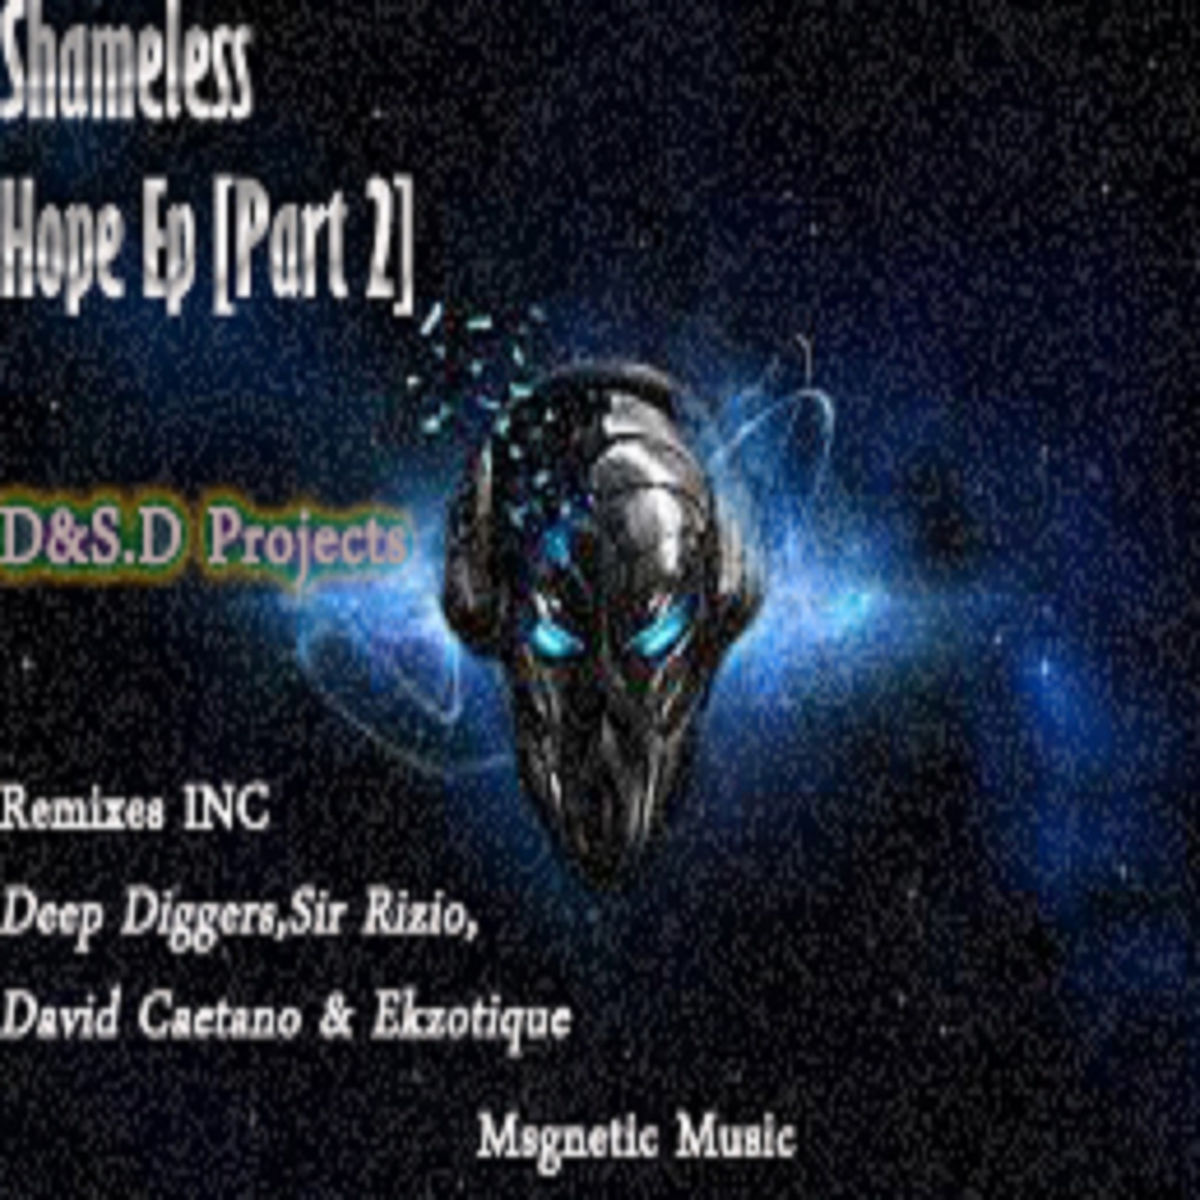 D&S.D Projects - Shameless Hope, Pt. 2 / magnetic music